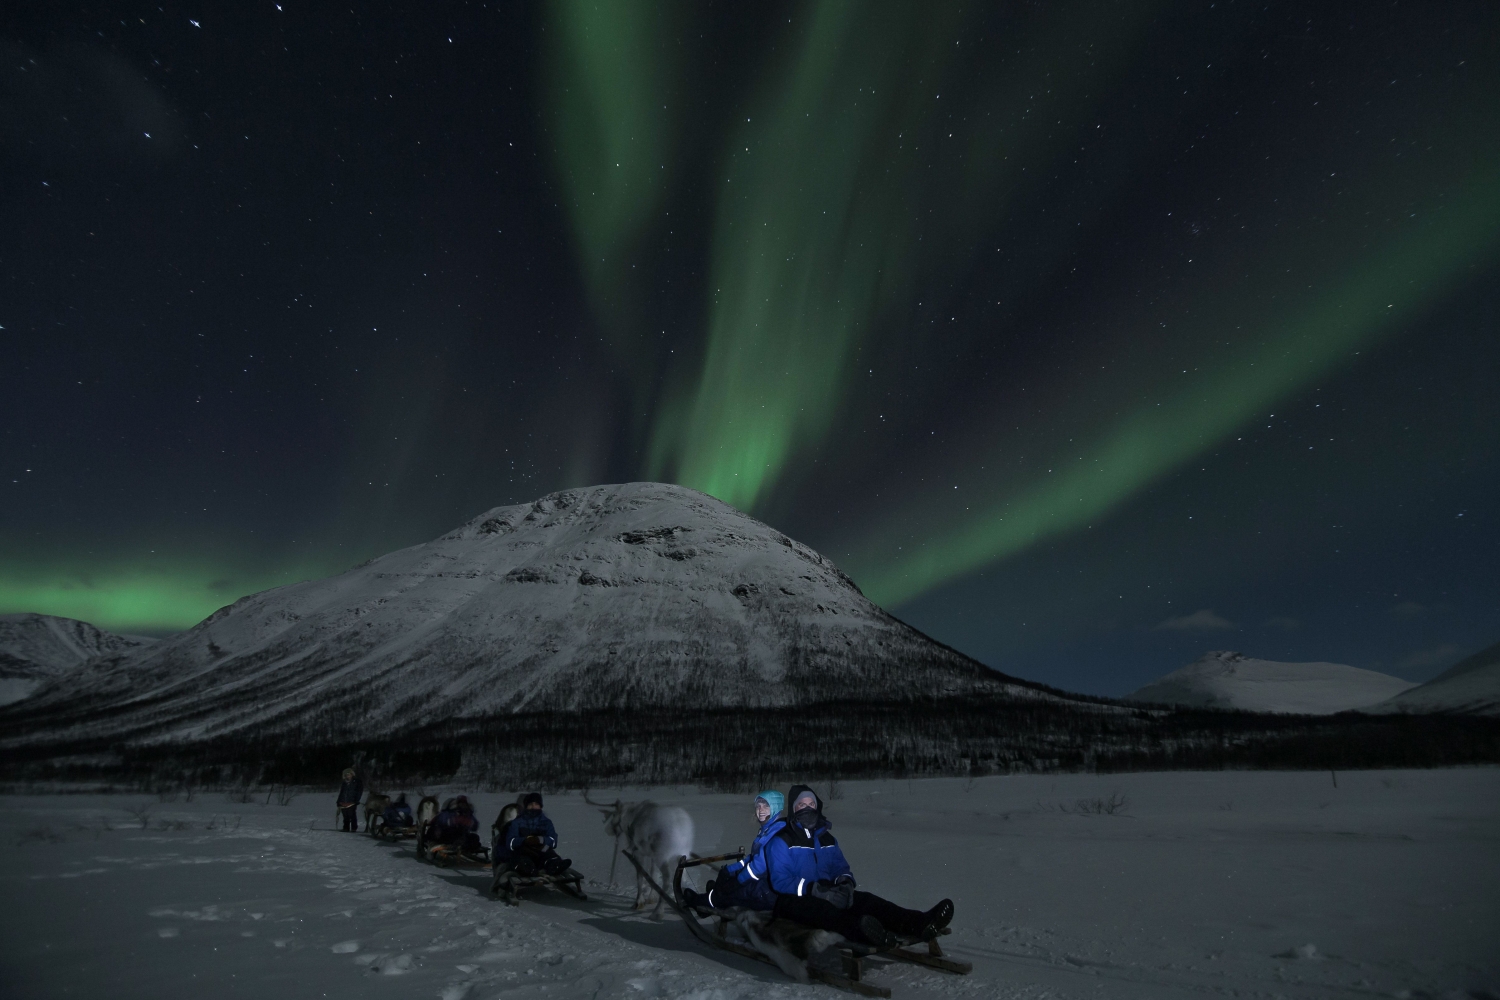 Reindeer sled and northern lights